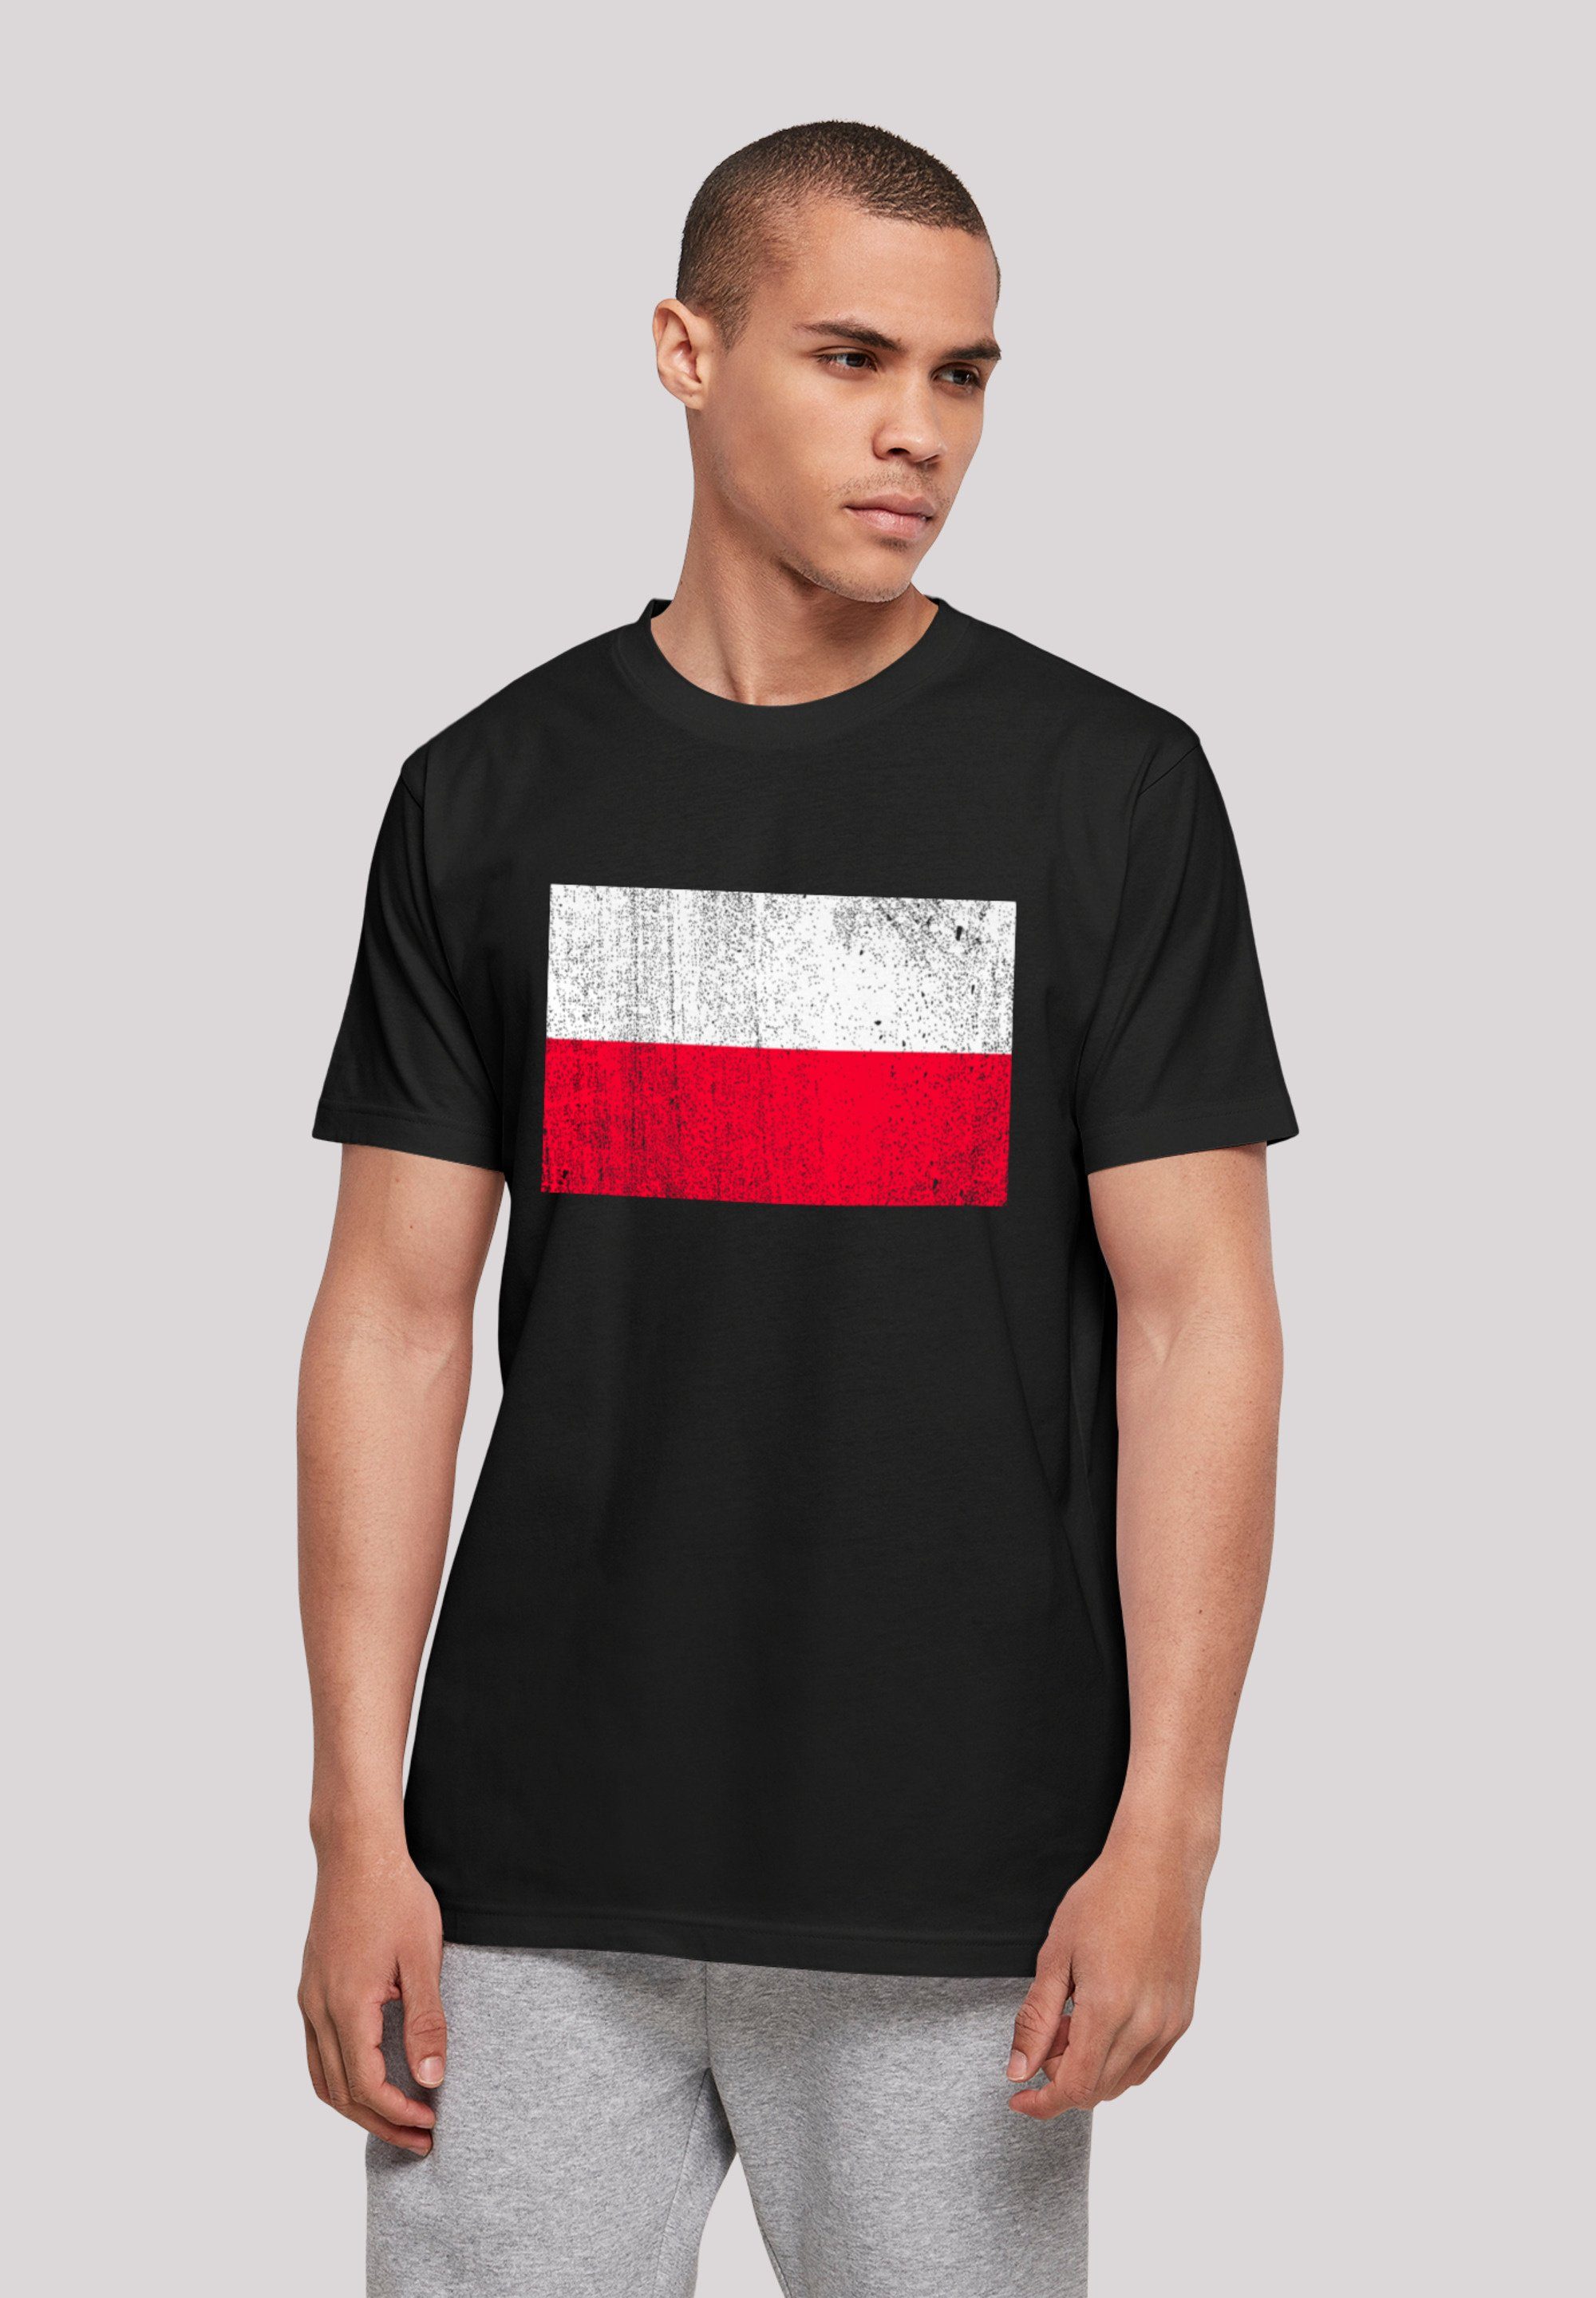 F4NT4STIC T-Shirt Polen Flagge Poland distressed Print schwarz